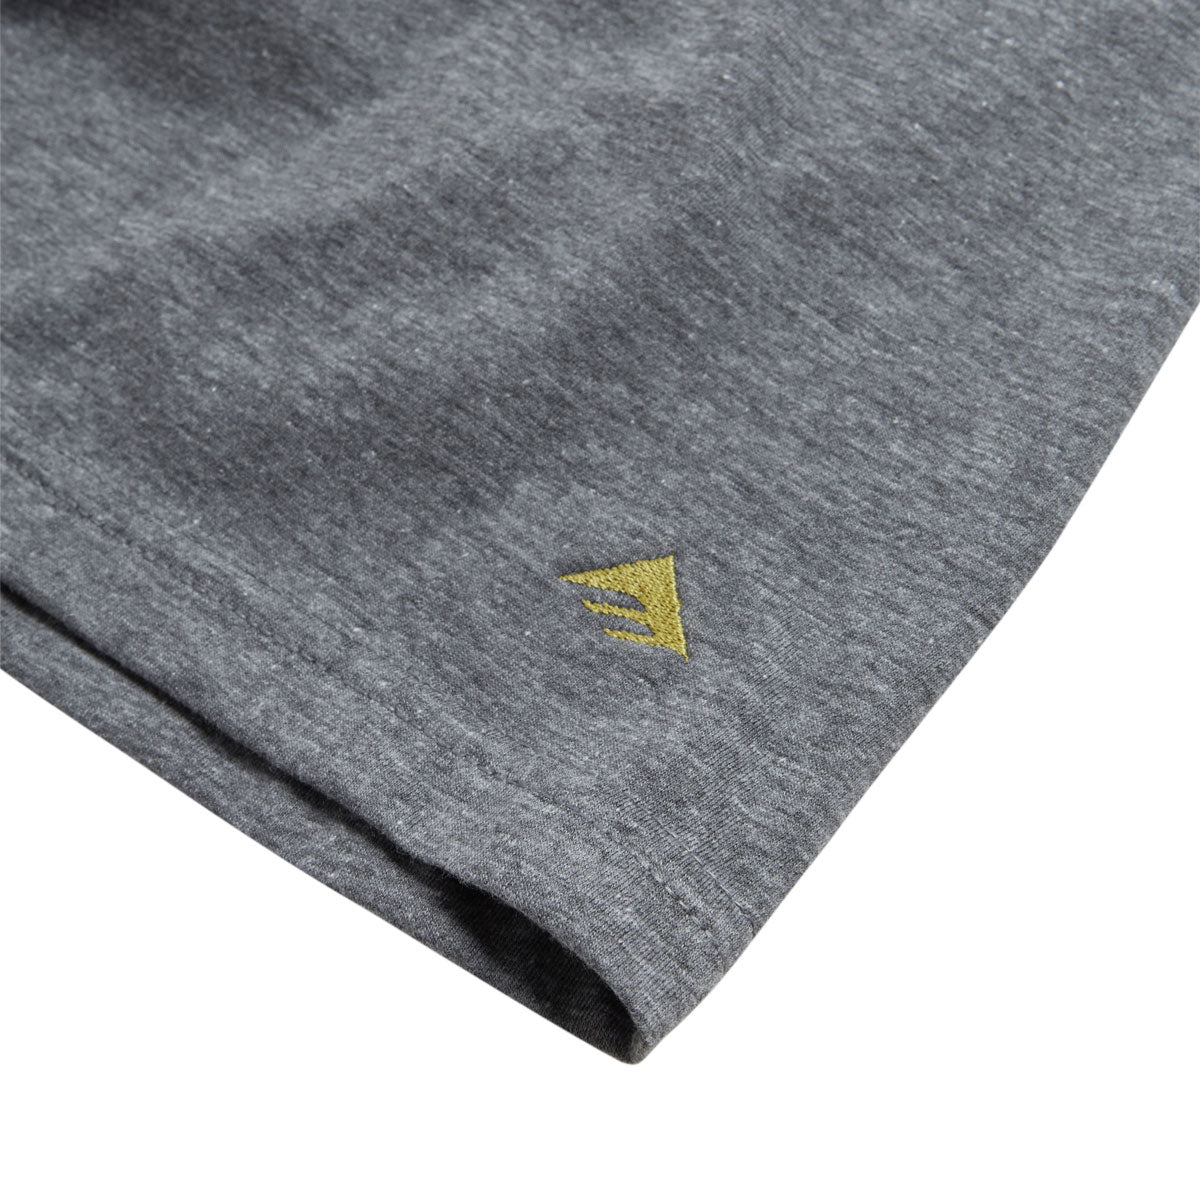 Emerica Micro Triangle T-Shirt - Charcoal/Heather image 2